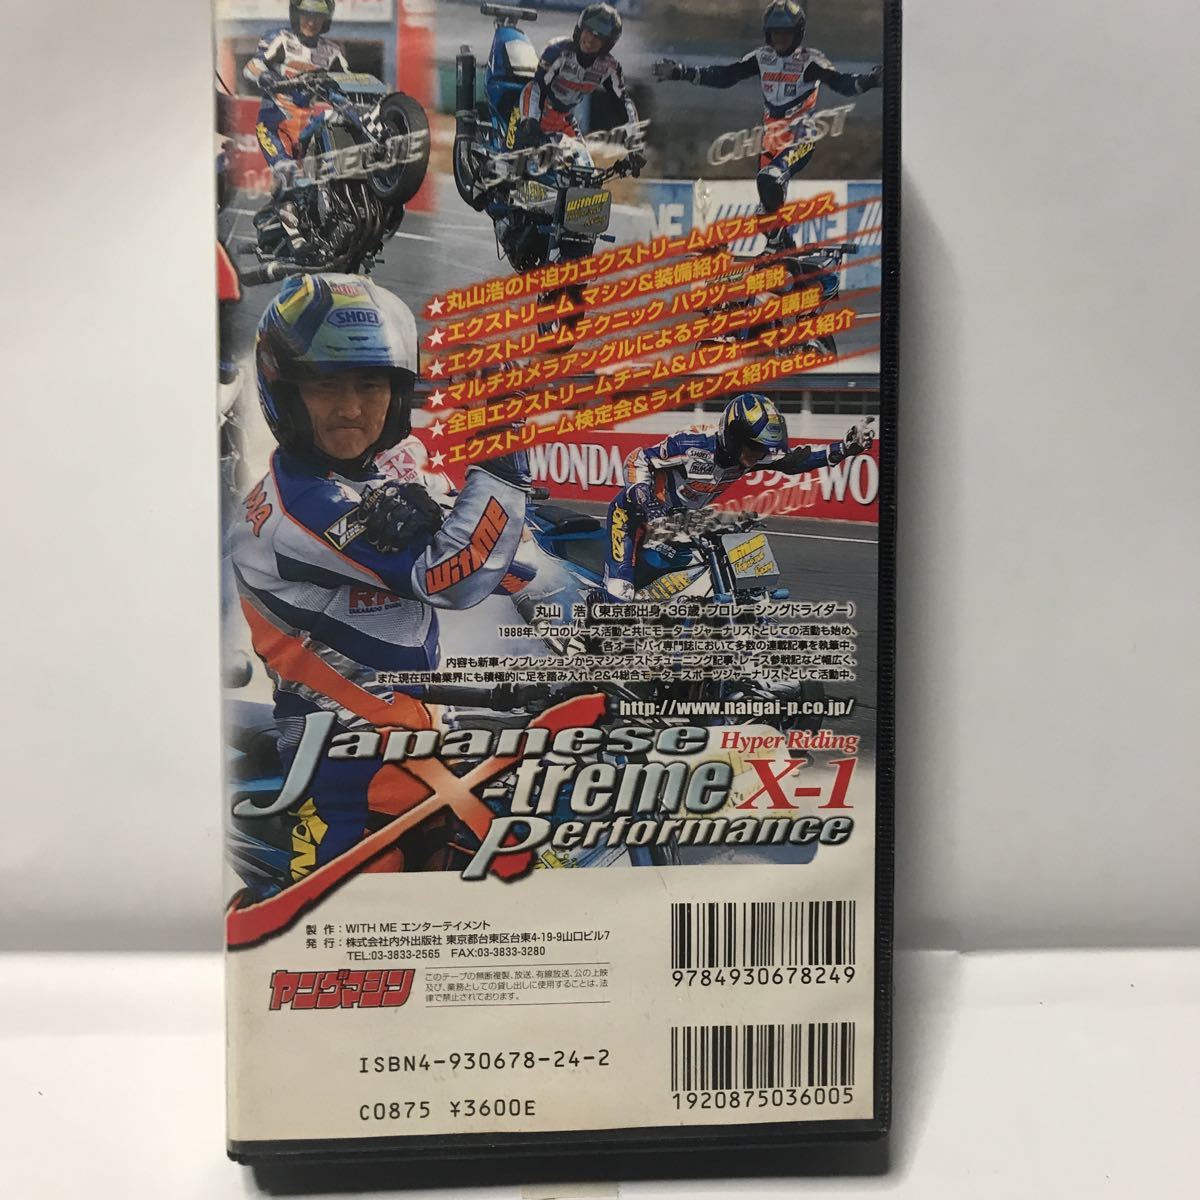  Maruyama .. bike * Extreme technique file x-treme VHS videotape reproduction no check 